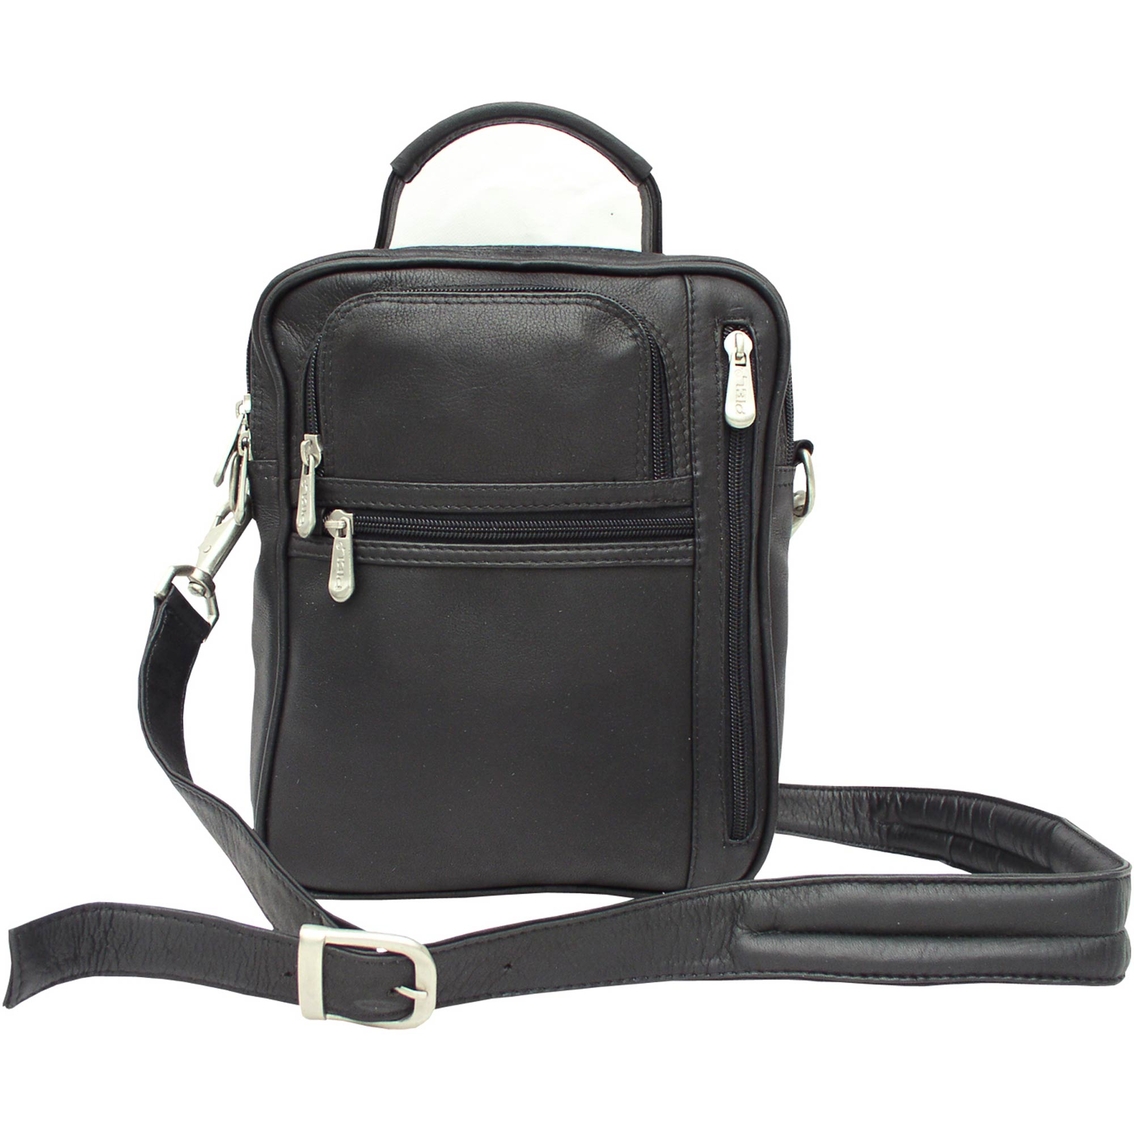 Piel Leather Radio/video/camera Bag | Storage Cases & Bags ...